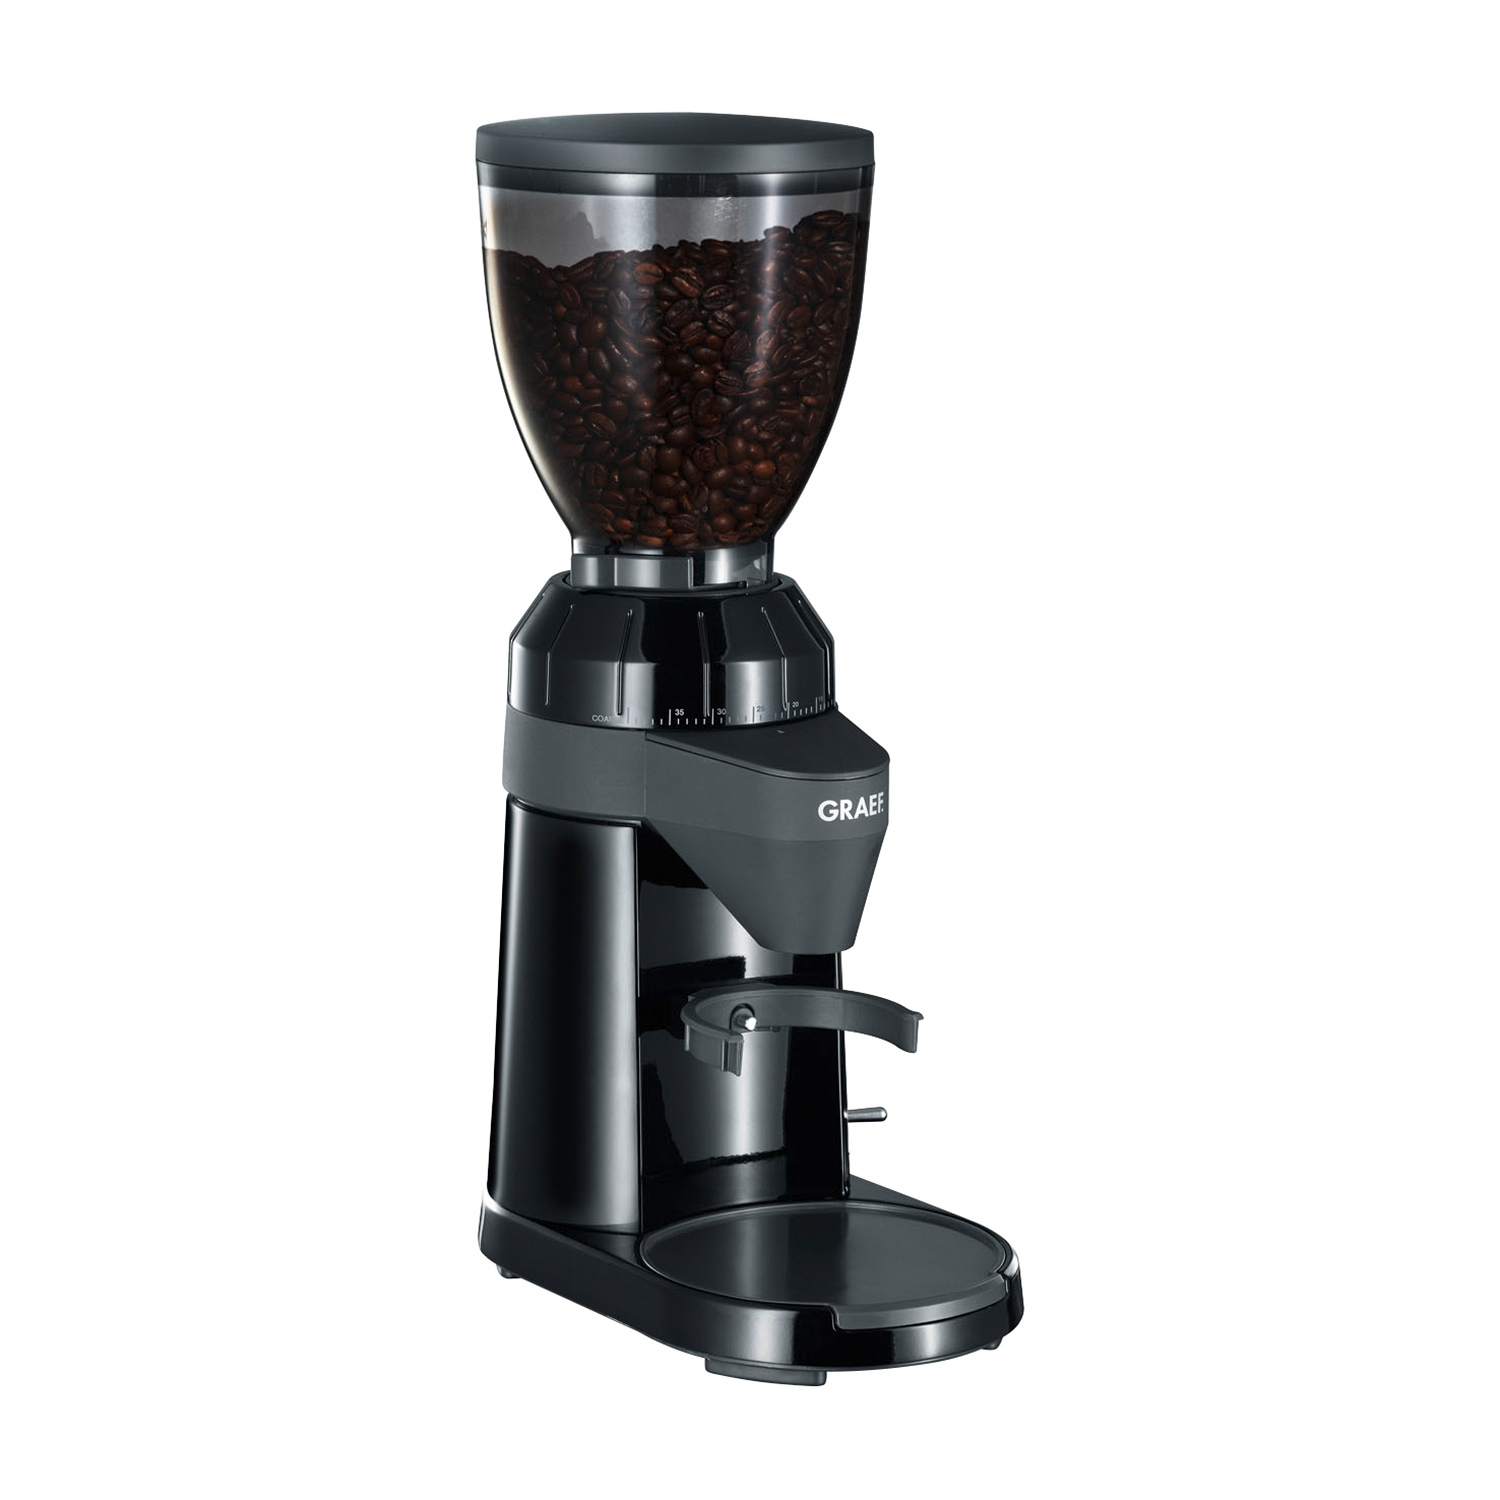 Graef - CM802 - Automatic grinder - Black